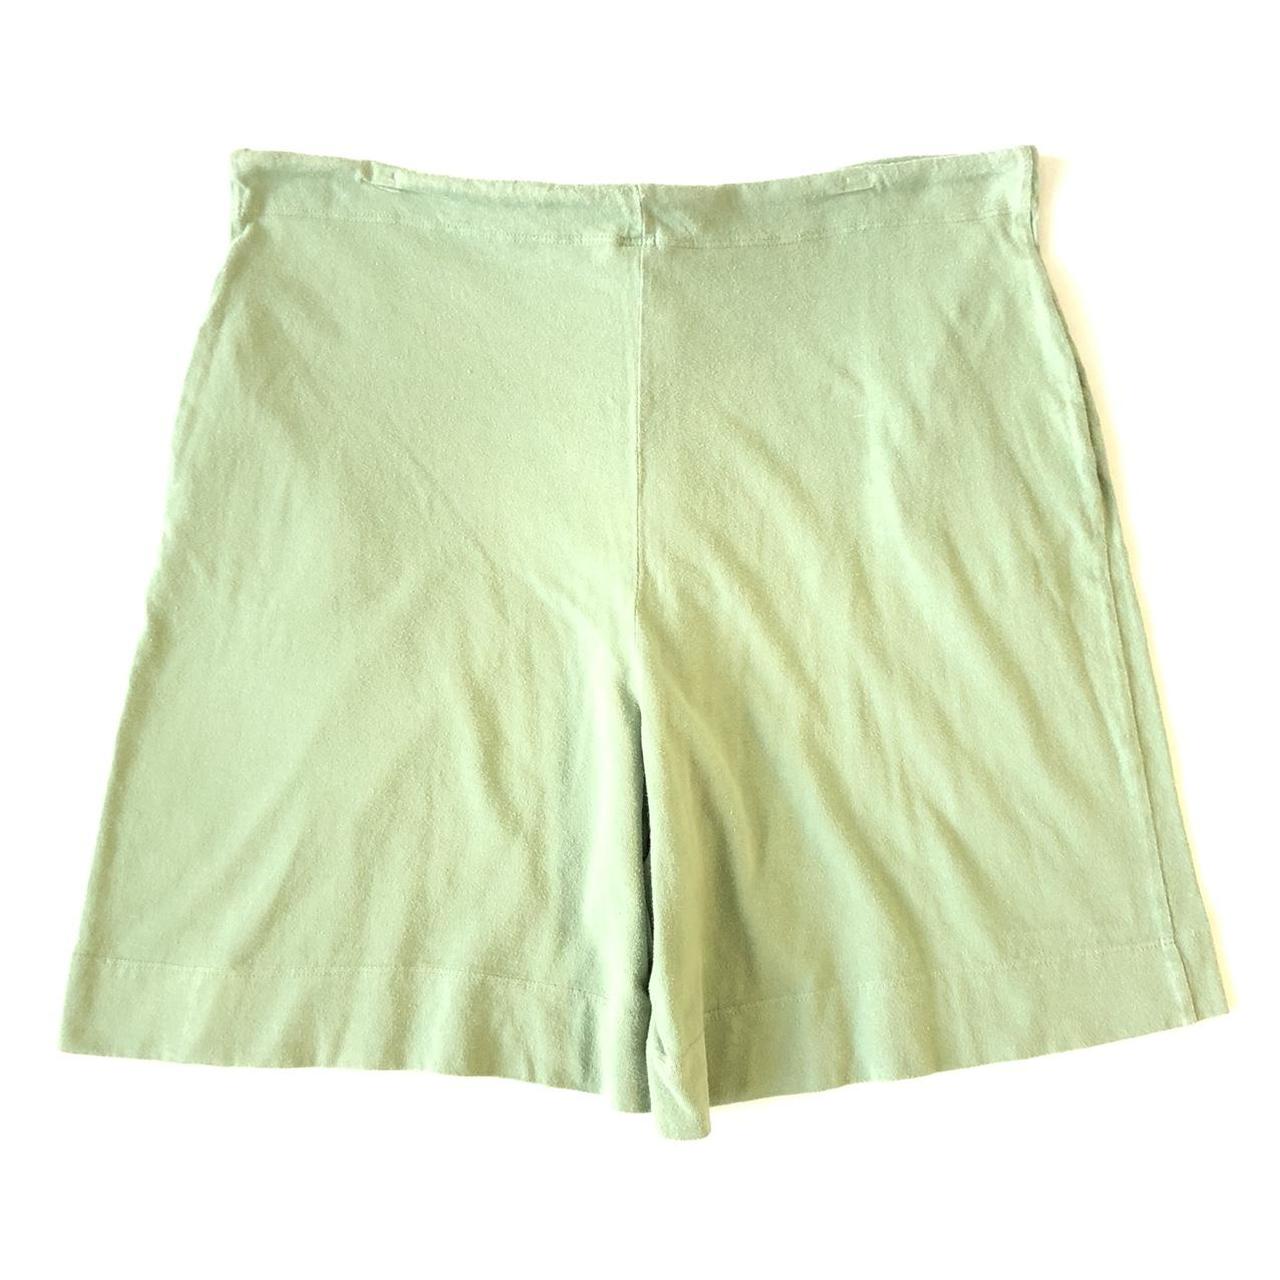 Pansy Women's Shorts (2)